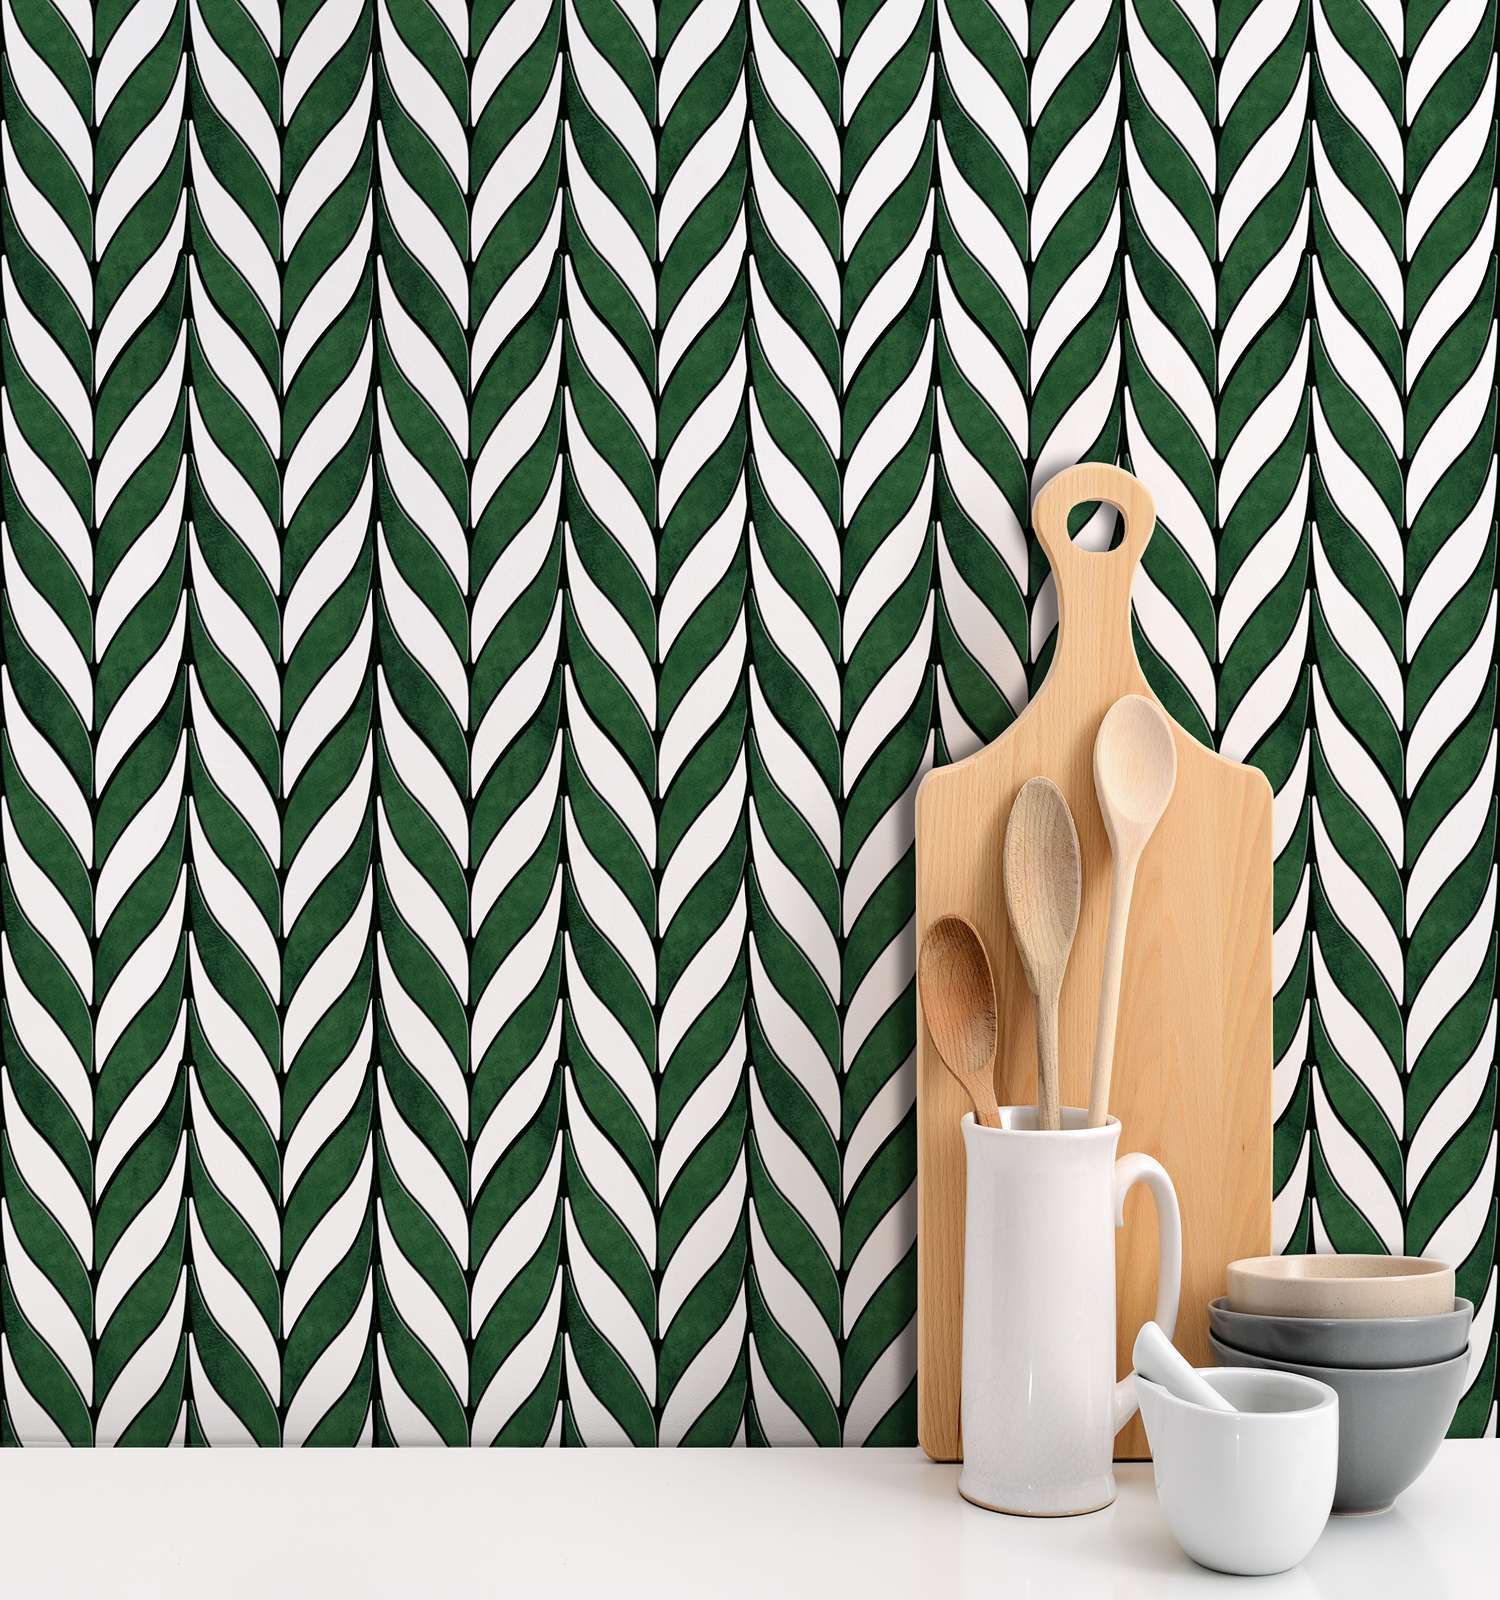 White and Green Chevron Peel and Stick Wall Tile | Kitchen Backsplash Tiles